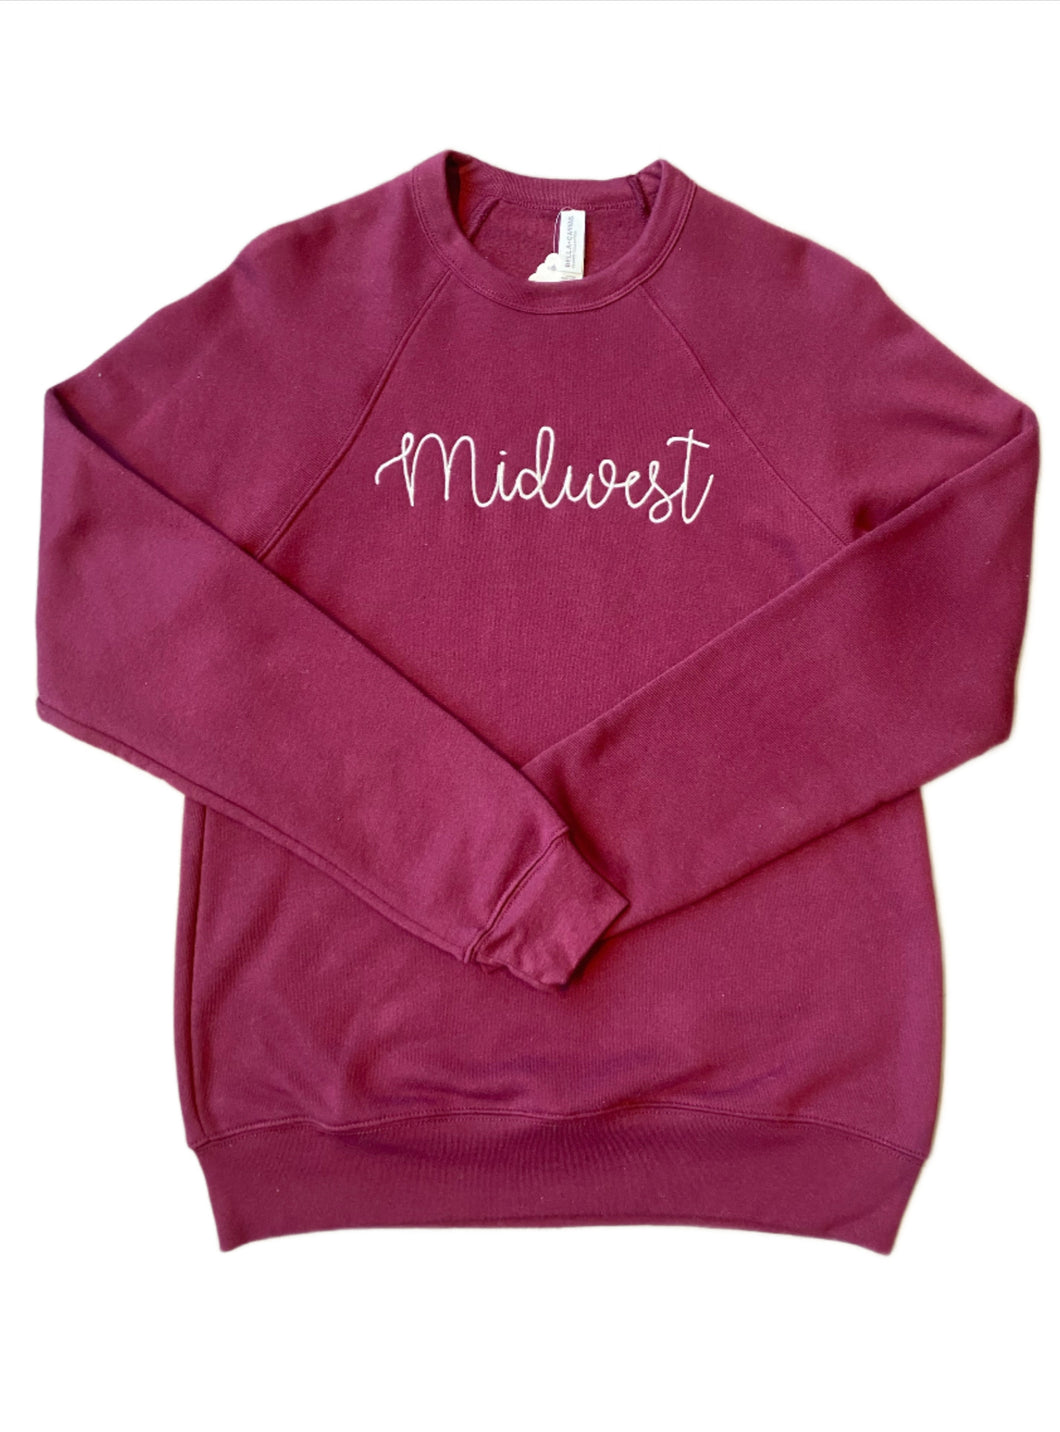 Embroidered Midwest Sweatshirt - Maroon